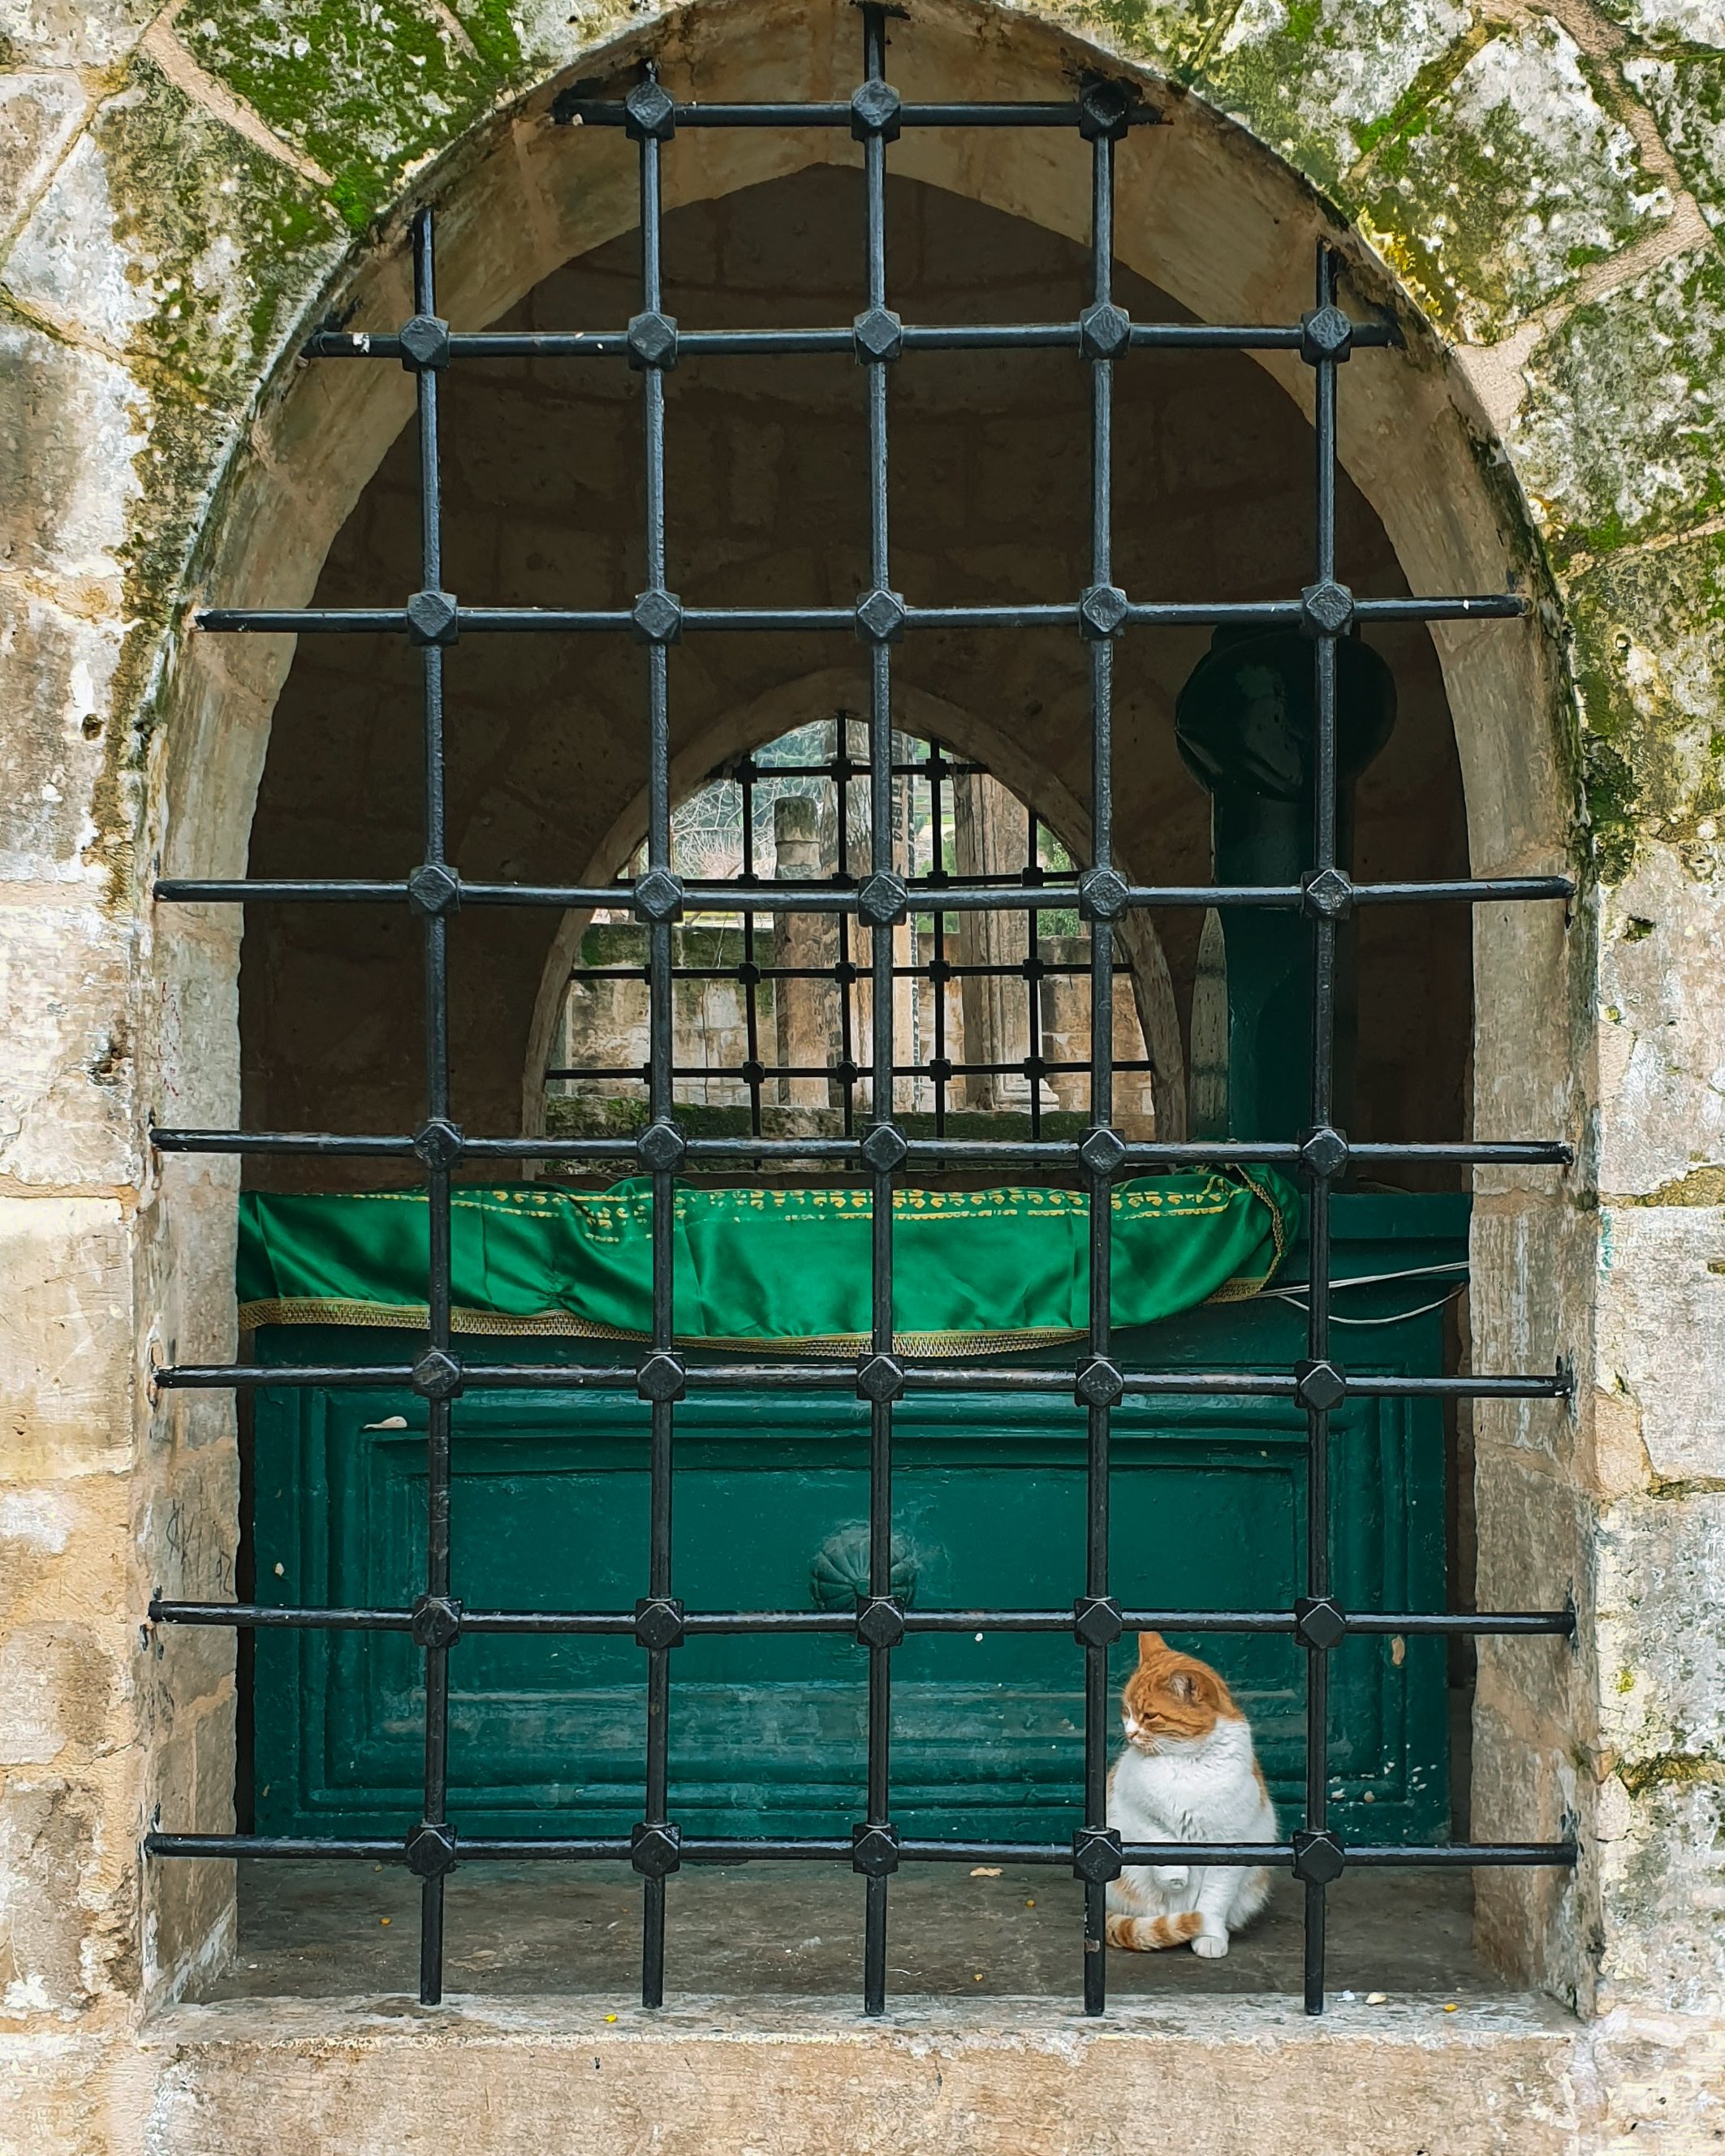 A cat in an old tomb near Balıklıgöl. (Photo by Argun Konuk)